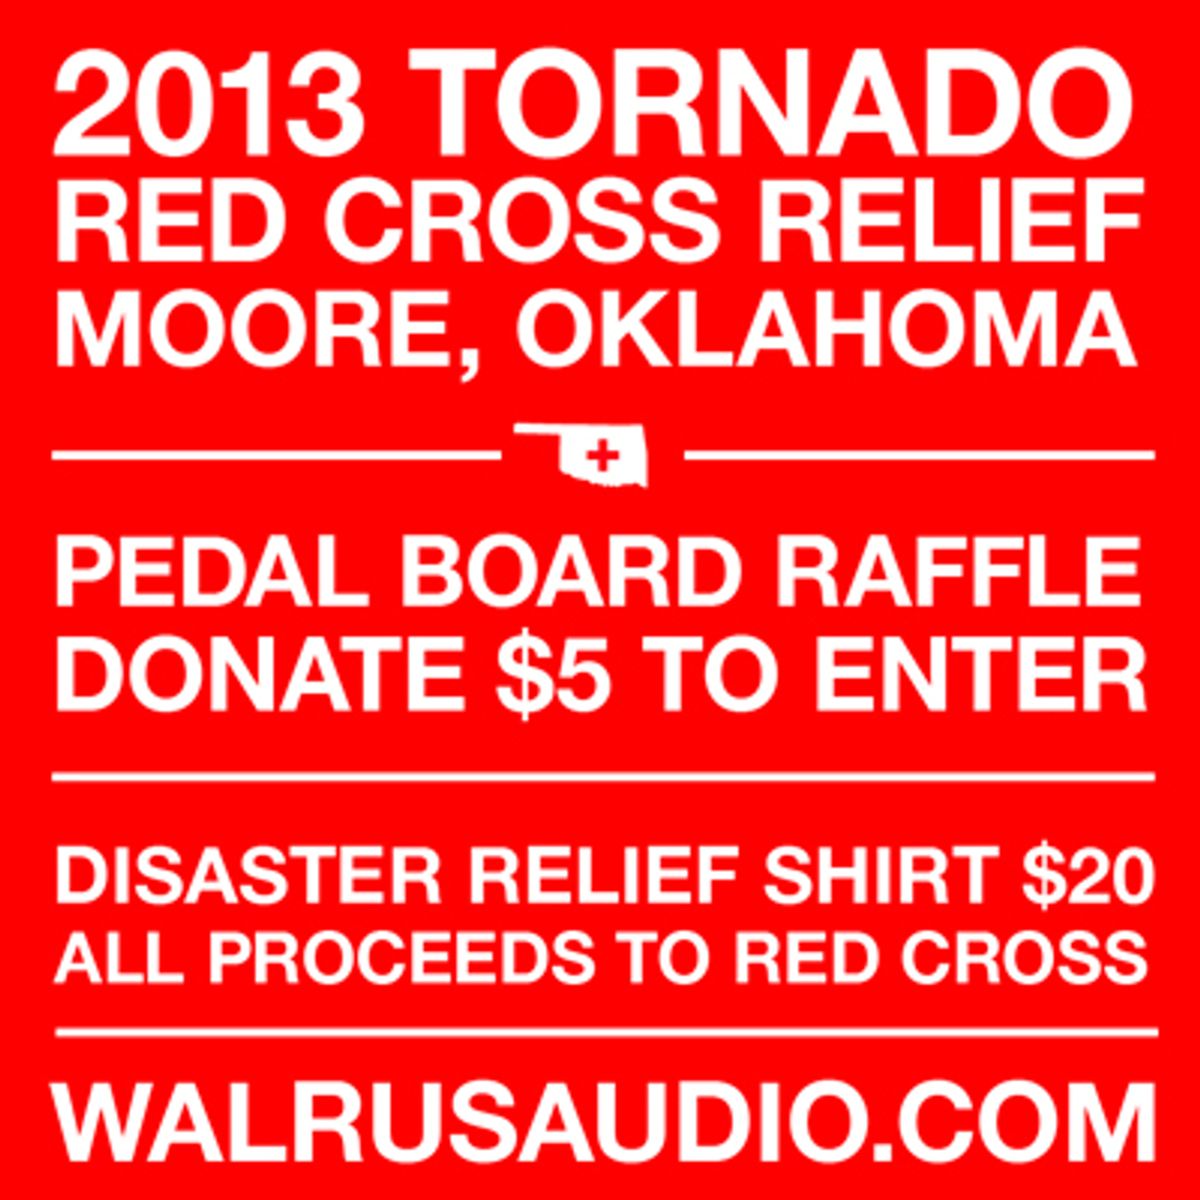 Walrus Audio Hosts Relief Fund for Oklahoma Tornado Victims